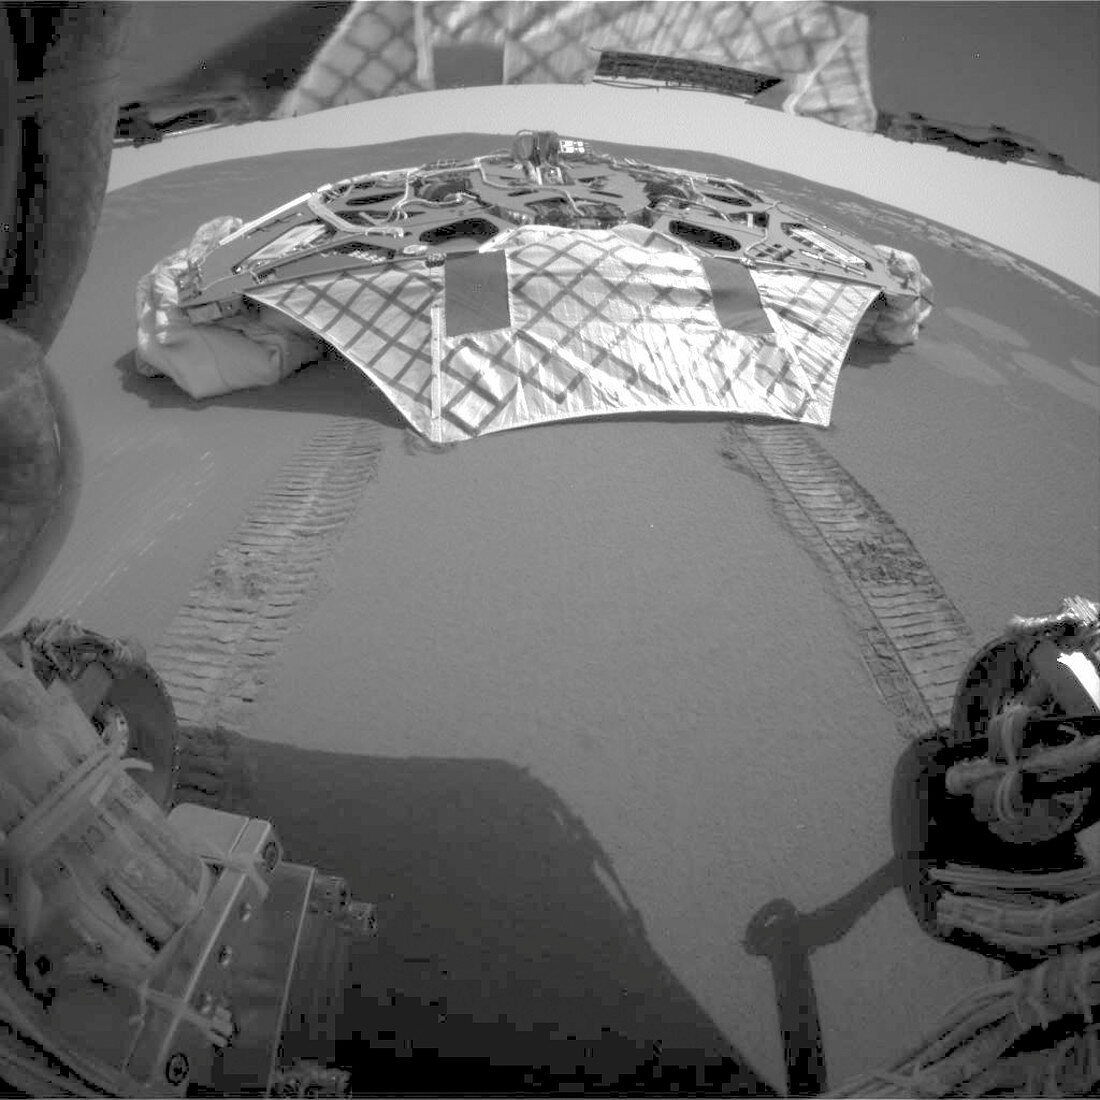 Opportunity's lander on Mars